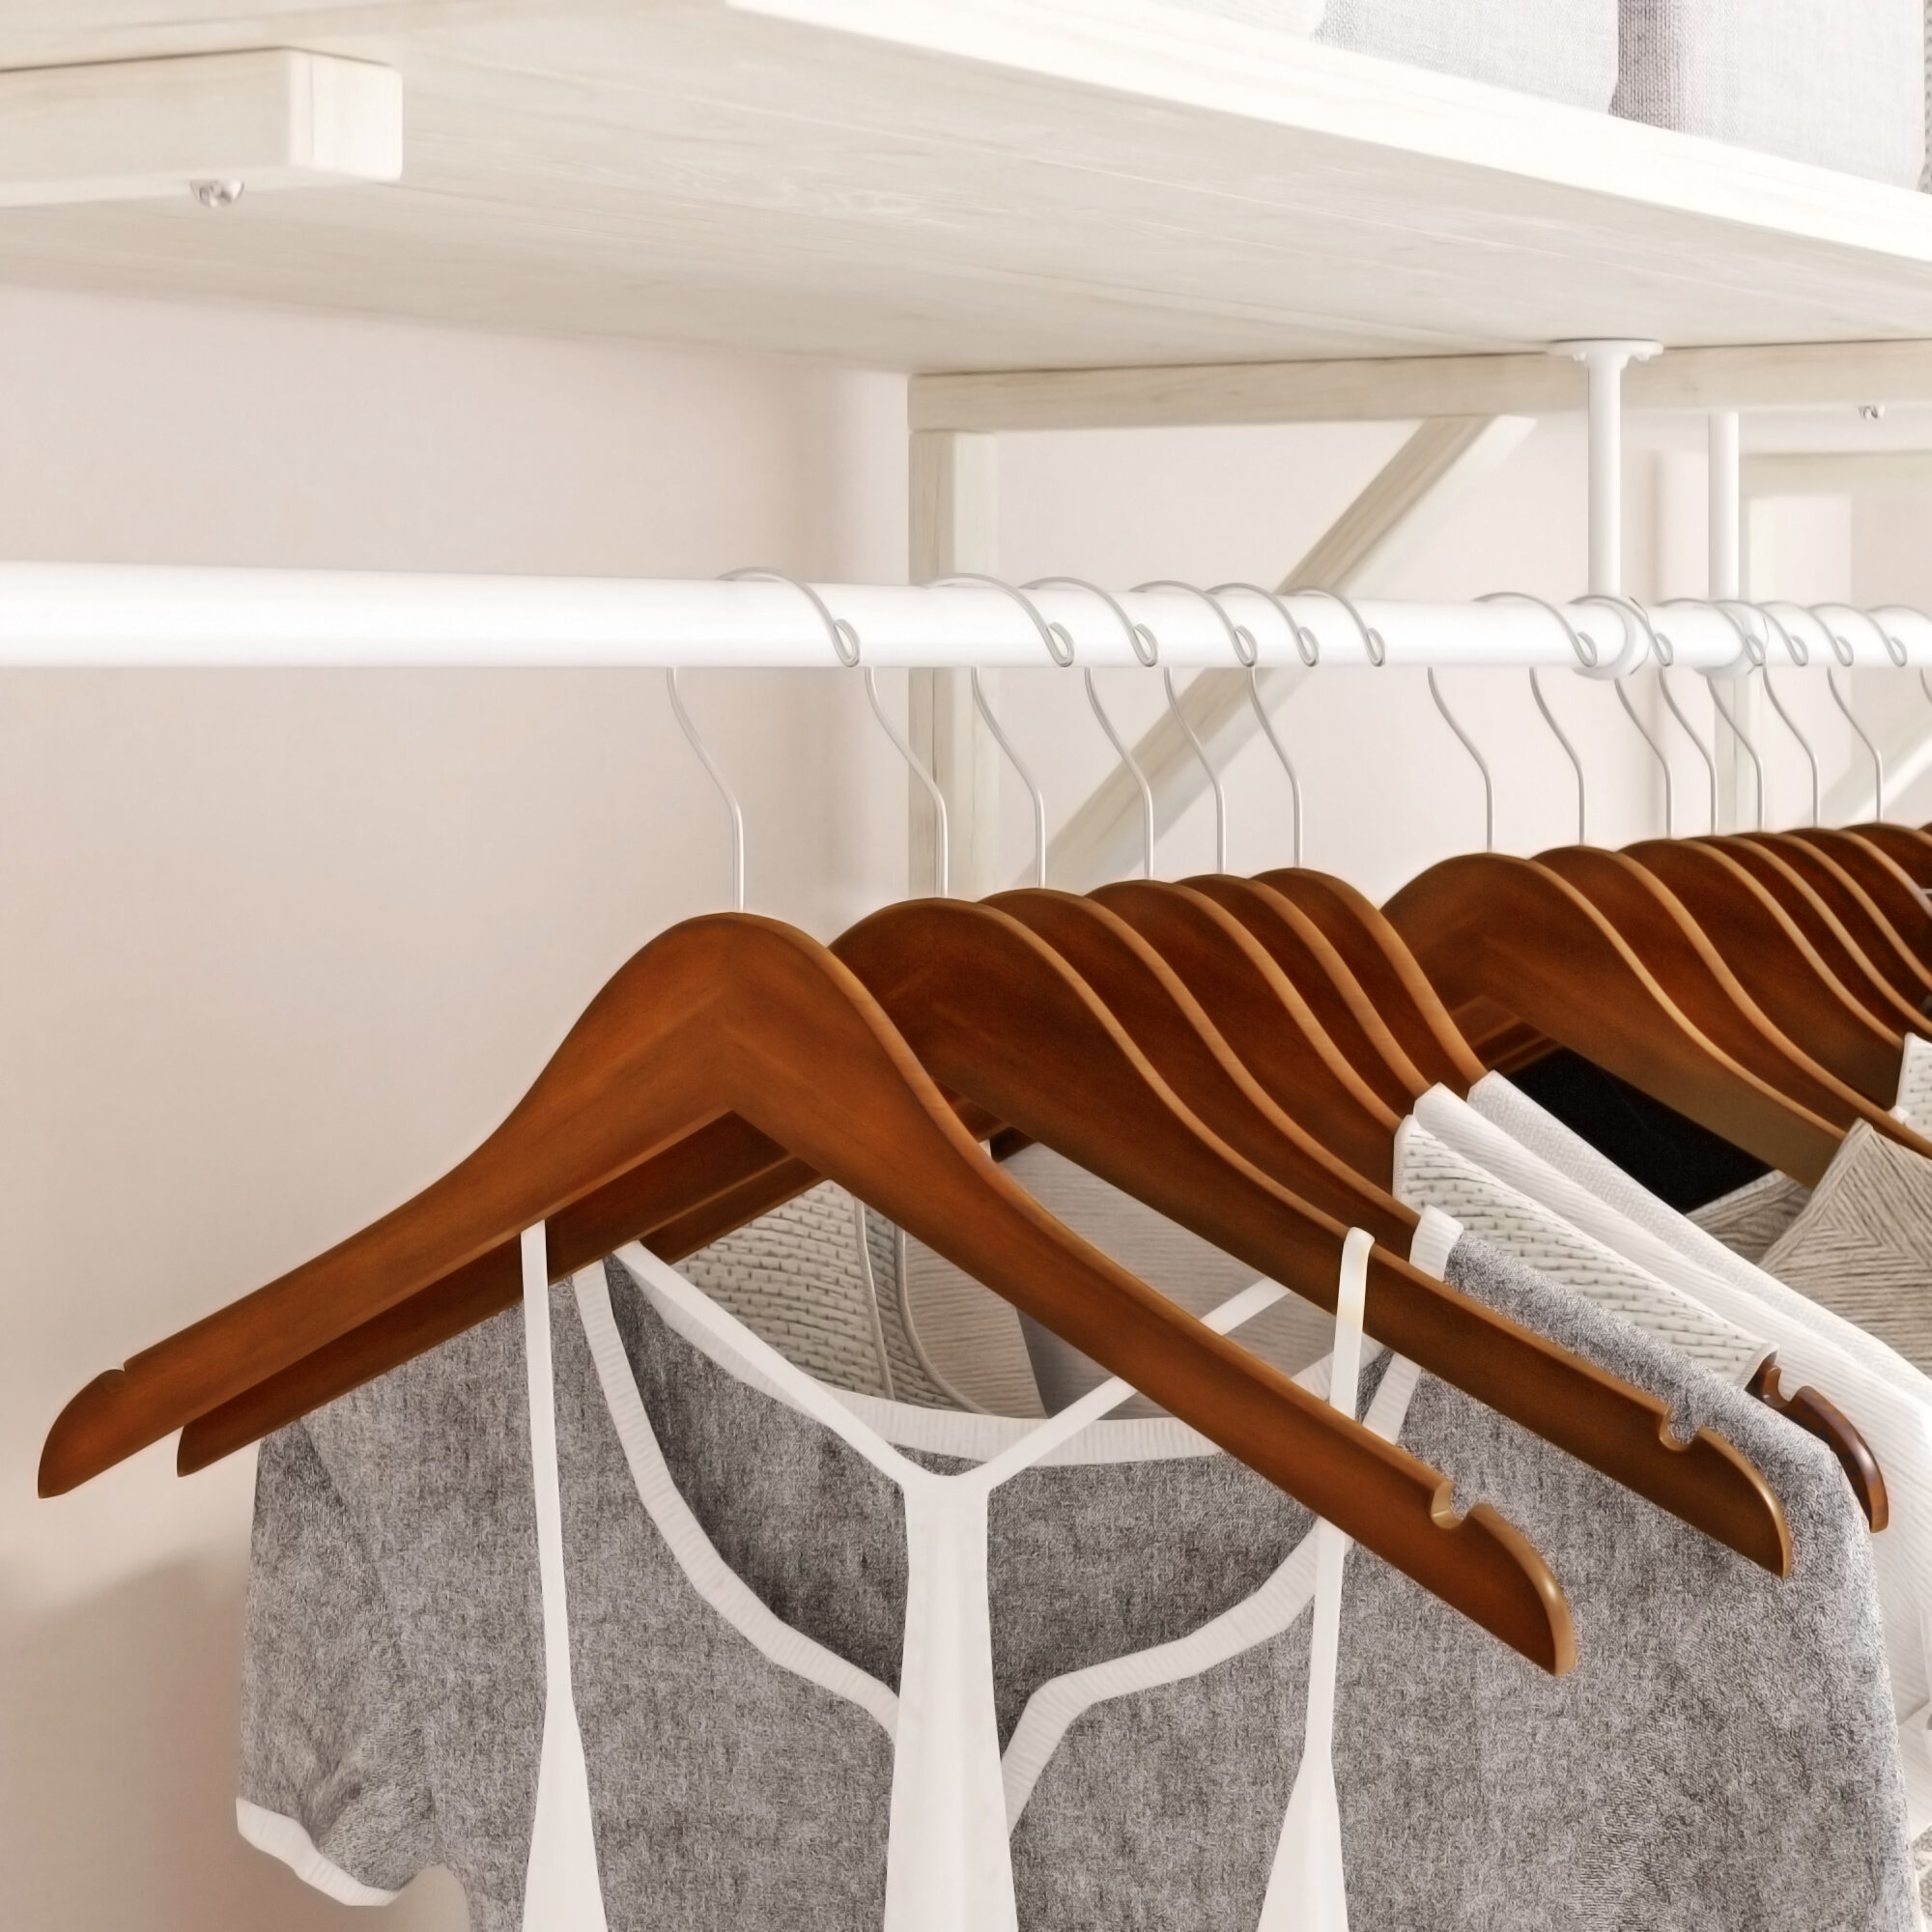 100 17" Flat Wood Retail Shirt Hangers Natural Finish w chrome swivel hook 